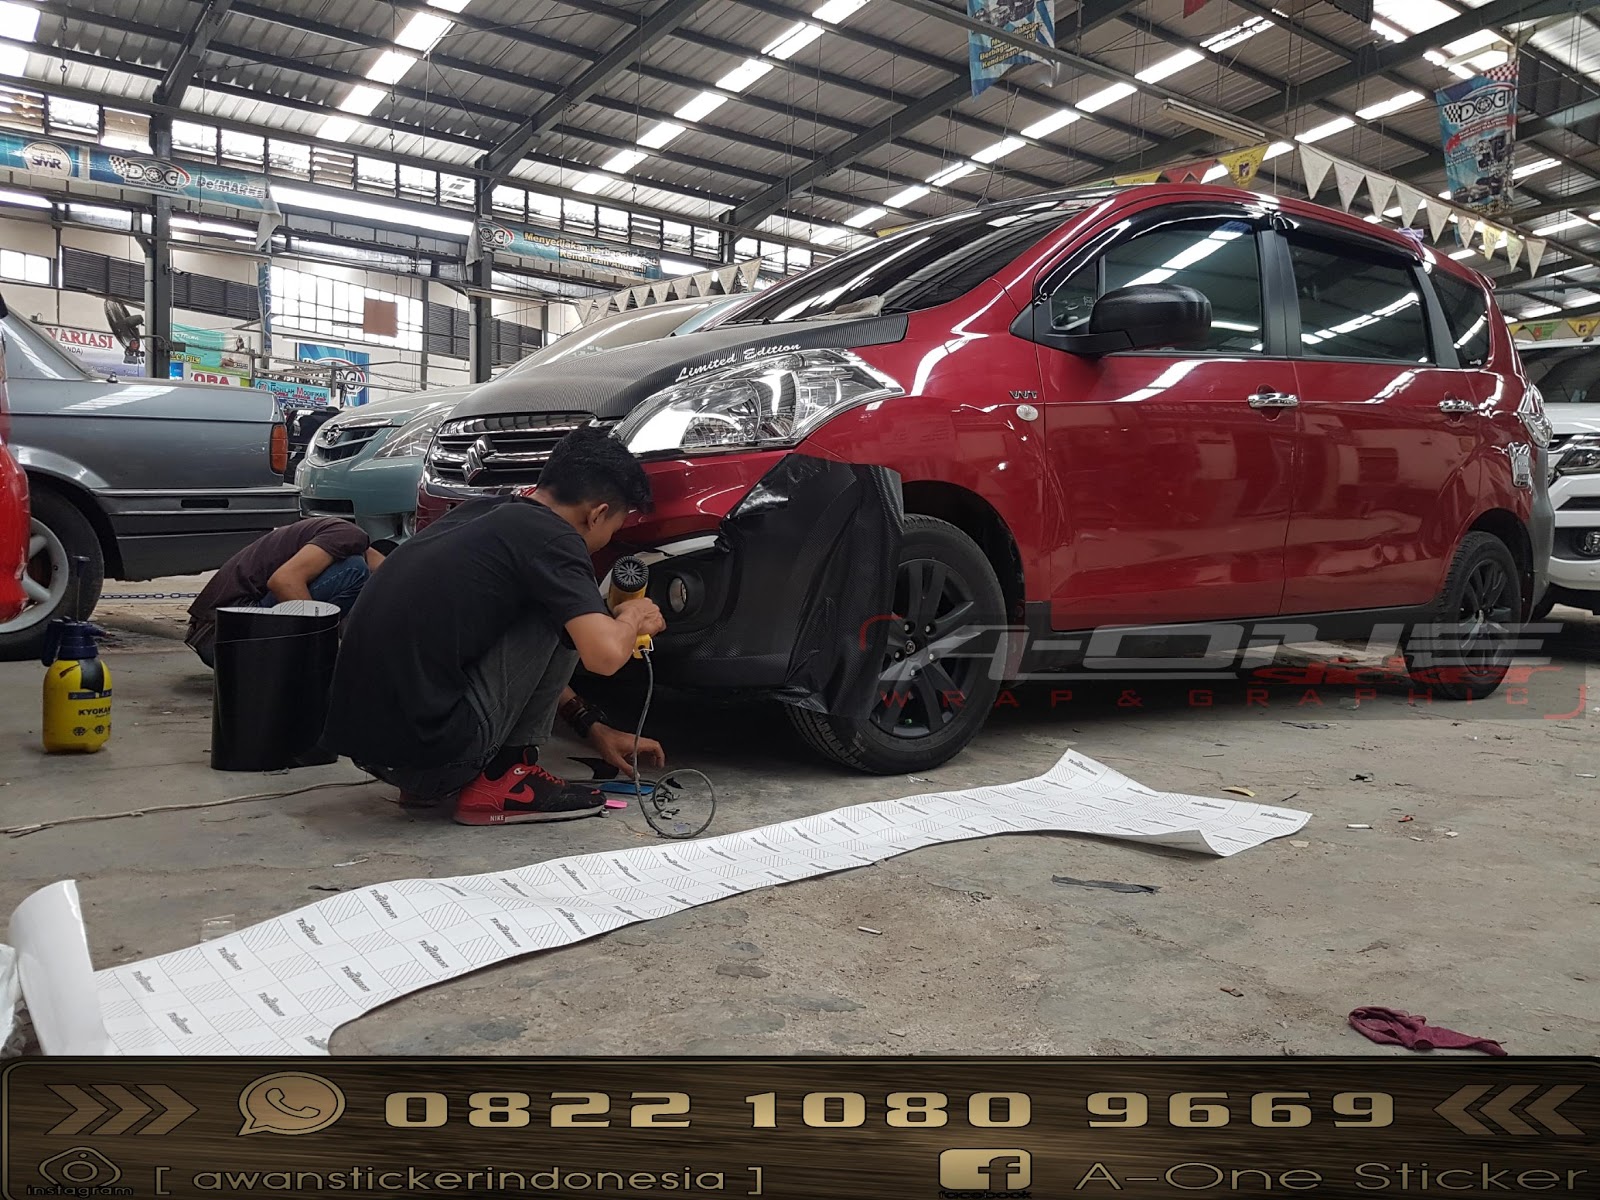 41 Top Ide Sticker Cutting Mobil Bogor